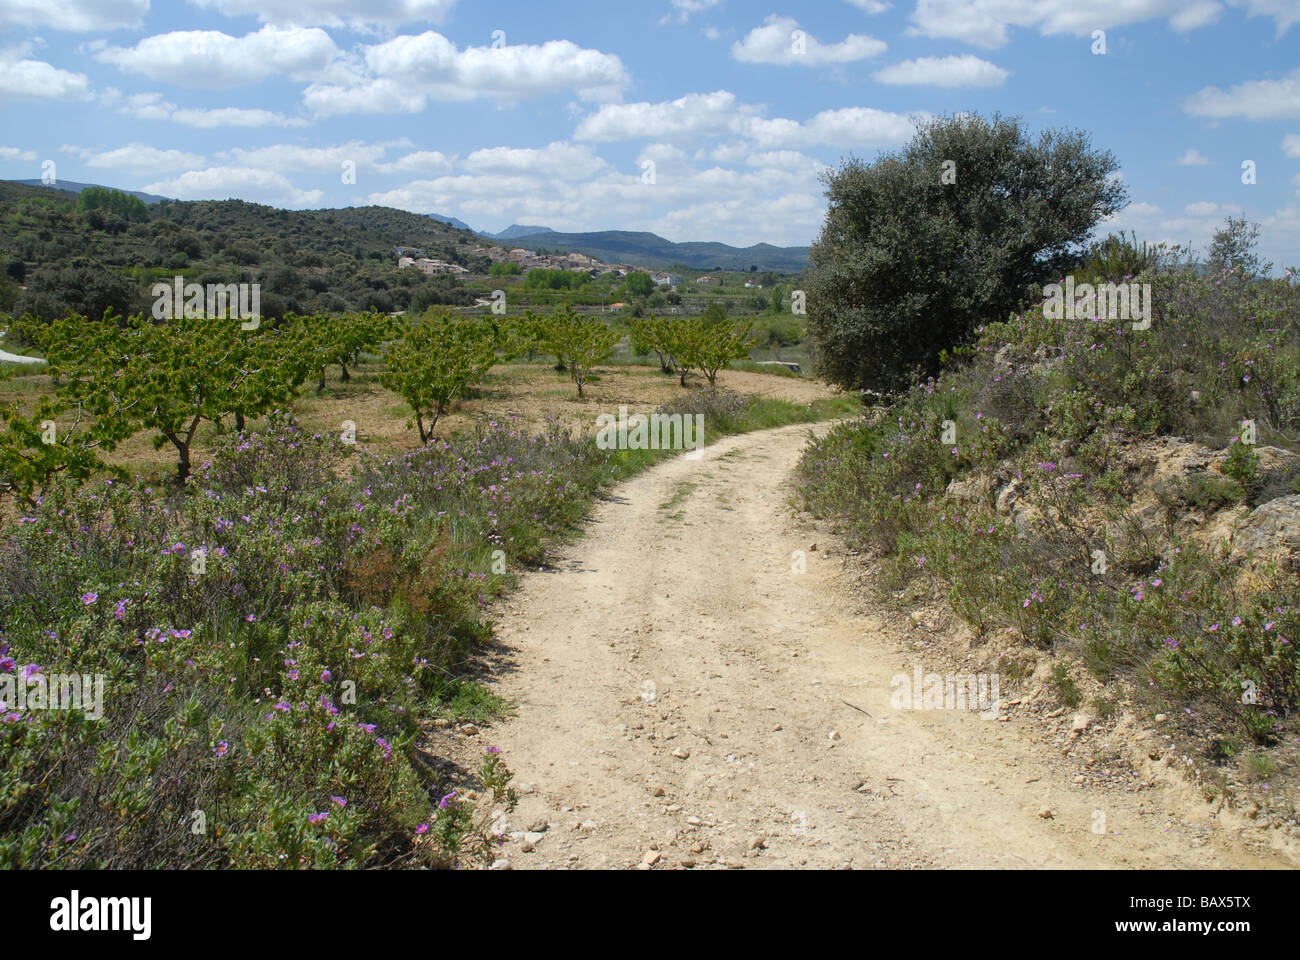 wildflowers and view to village of Alcala de la Jovada, Vall de Alcala, Alicante province, Comunidad Valenciana, Spain Stock Photo